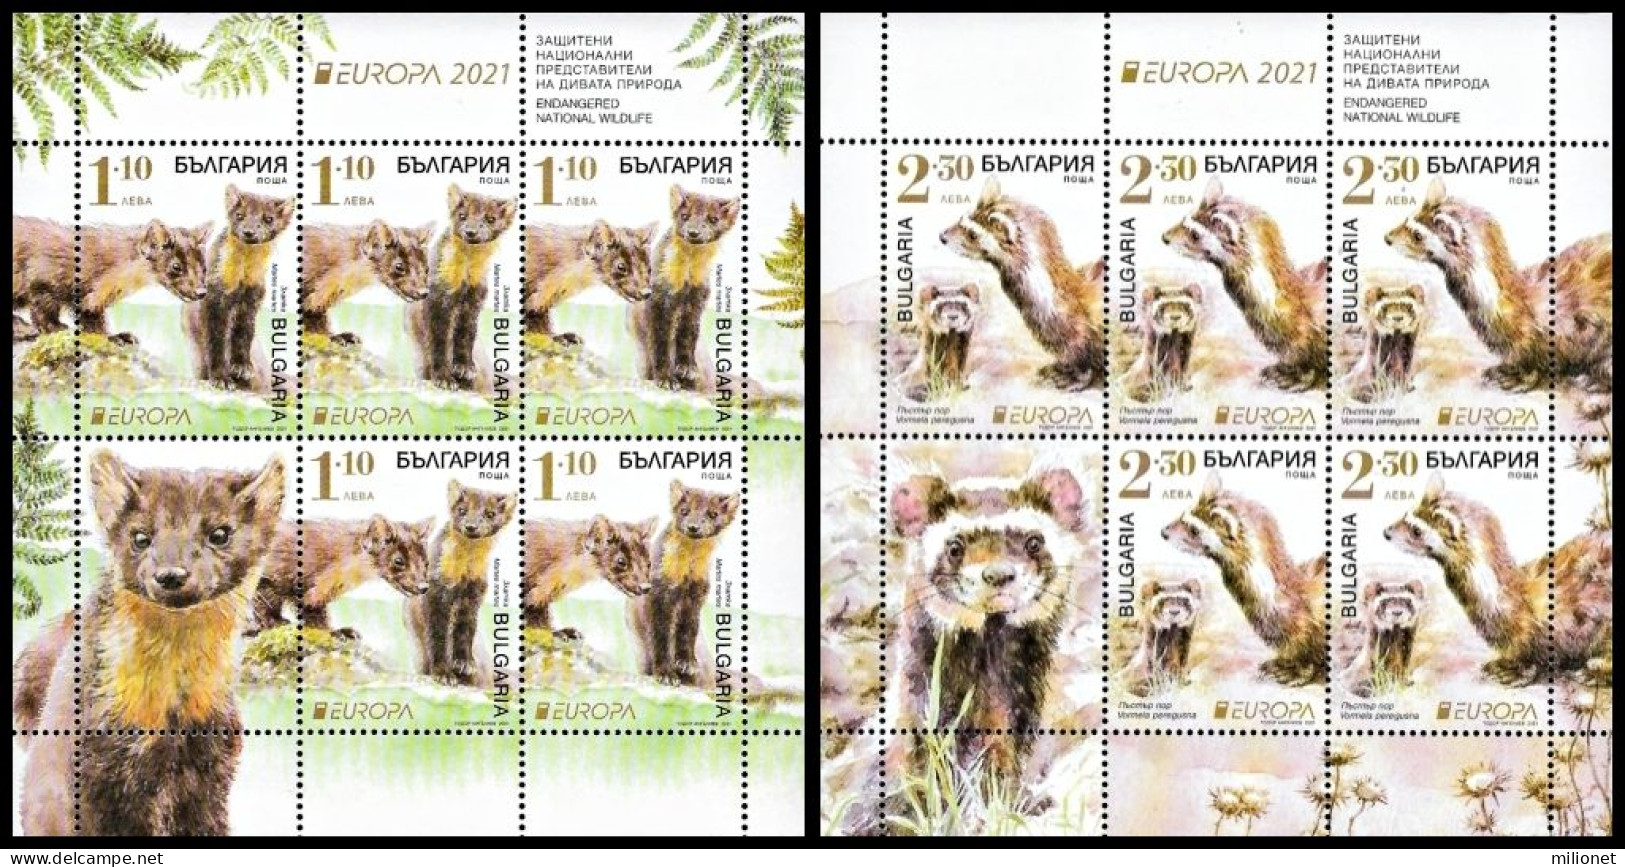 SALE!!! BULGARIA BULGARIE BULGARIEN 2021 EUROPA CEPT Endangered National Wildlife 2 Sheetlets Of 5 Stamps + 1 Vignette** - 2021